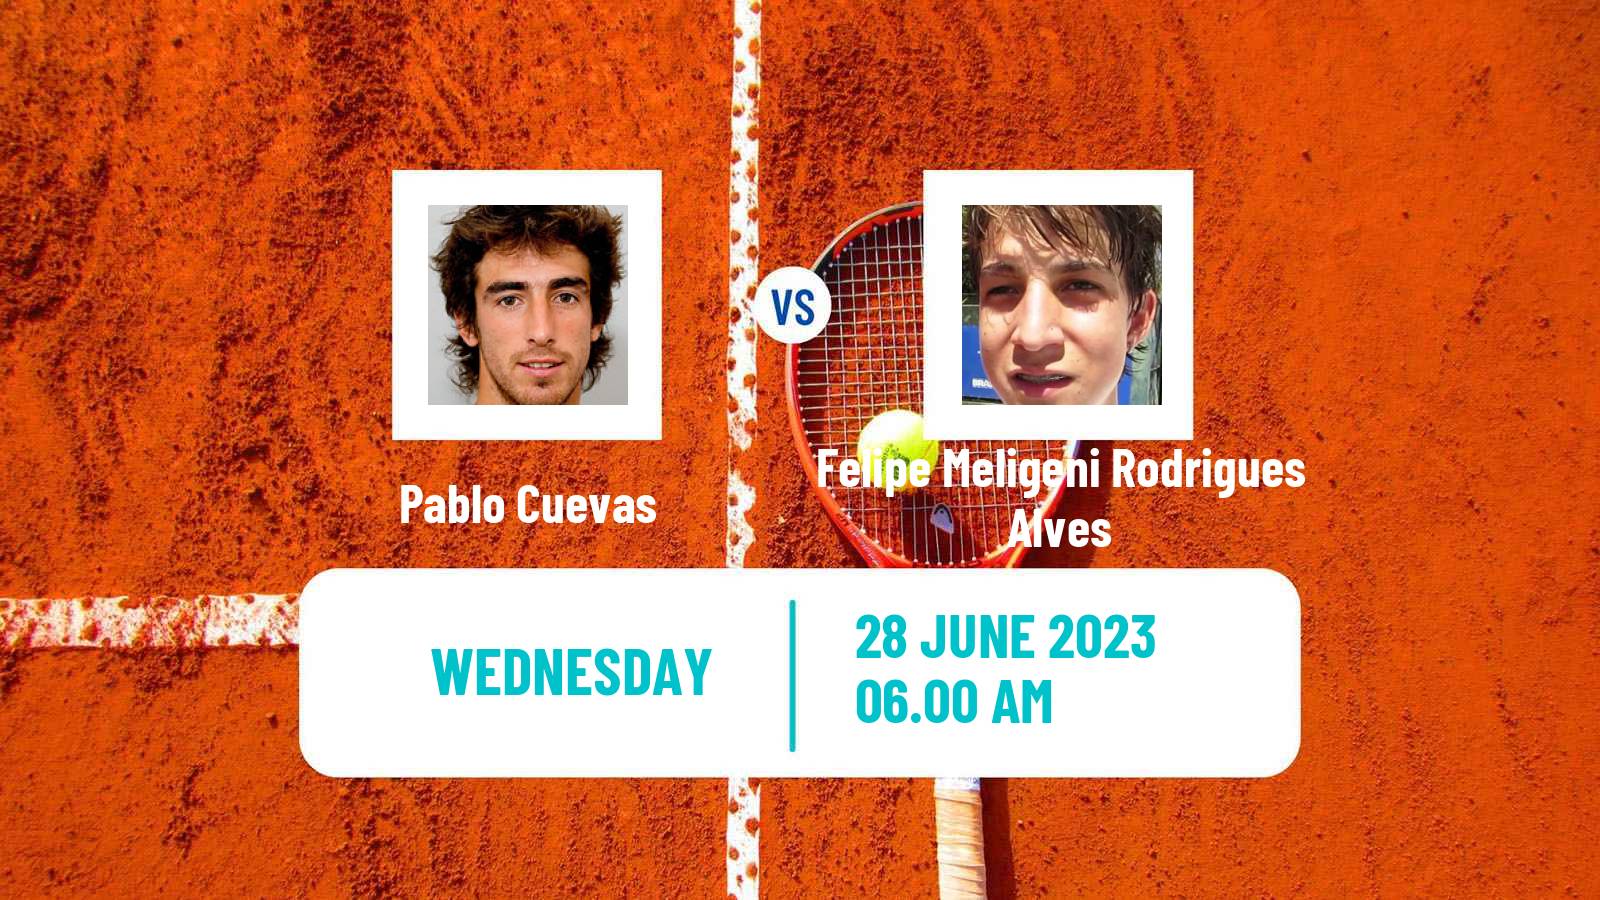 Tennis ATP Wimbledon Pablo Cuevas - Felipe Meligeni Rodrigues Alves